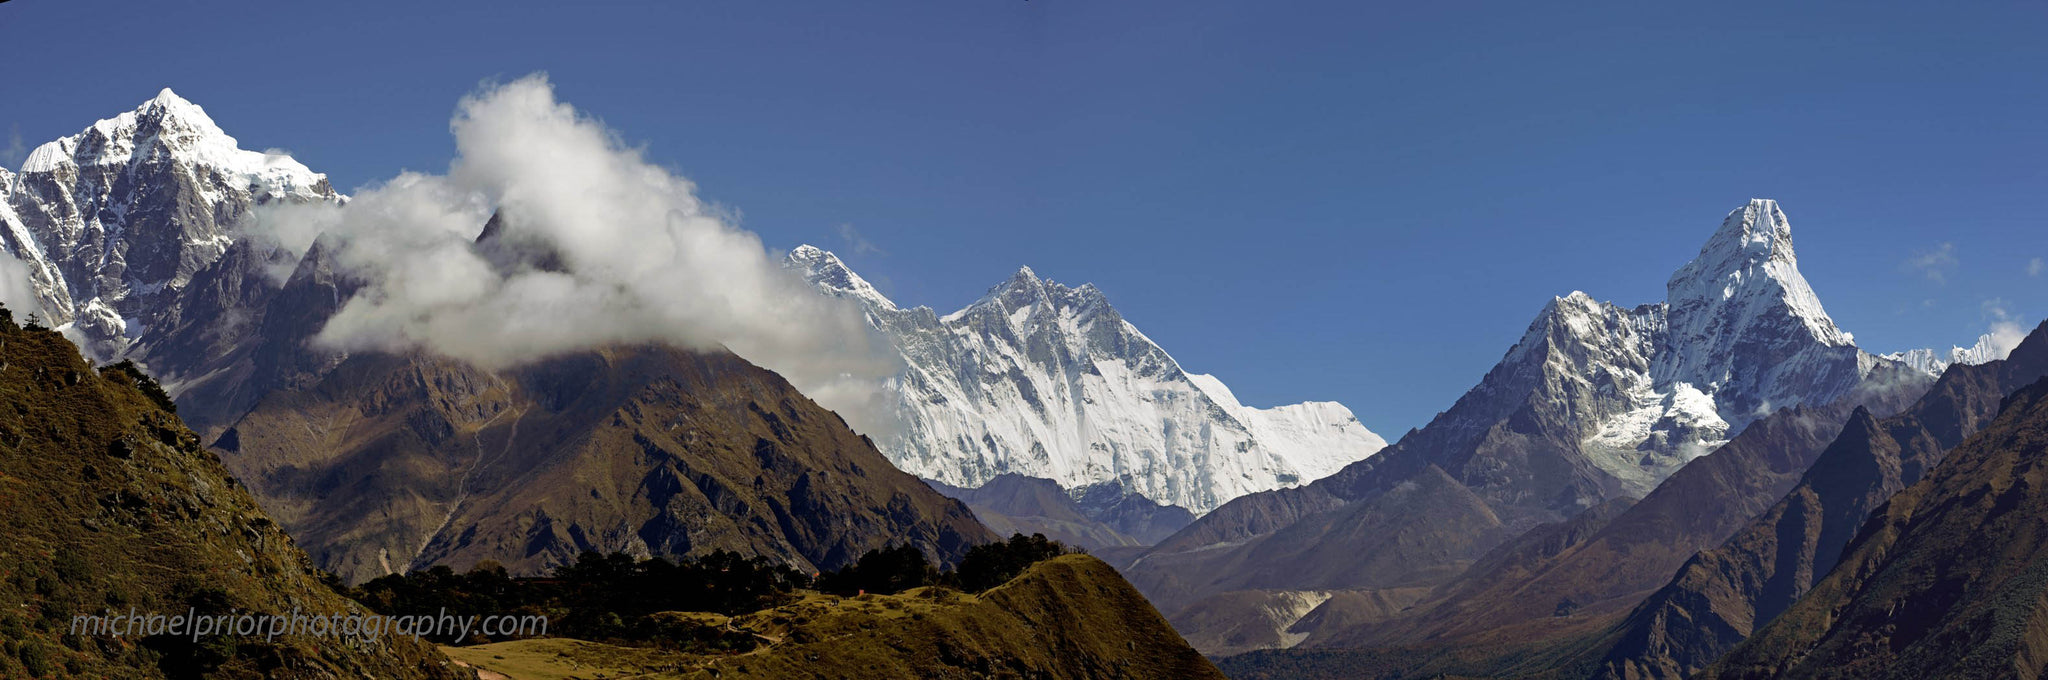 Himayan Panoramic With Mt Everest, Mt Lhotse And Ama Dablam